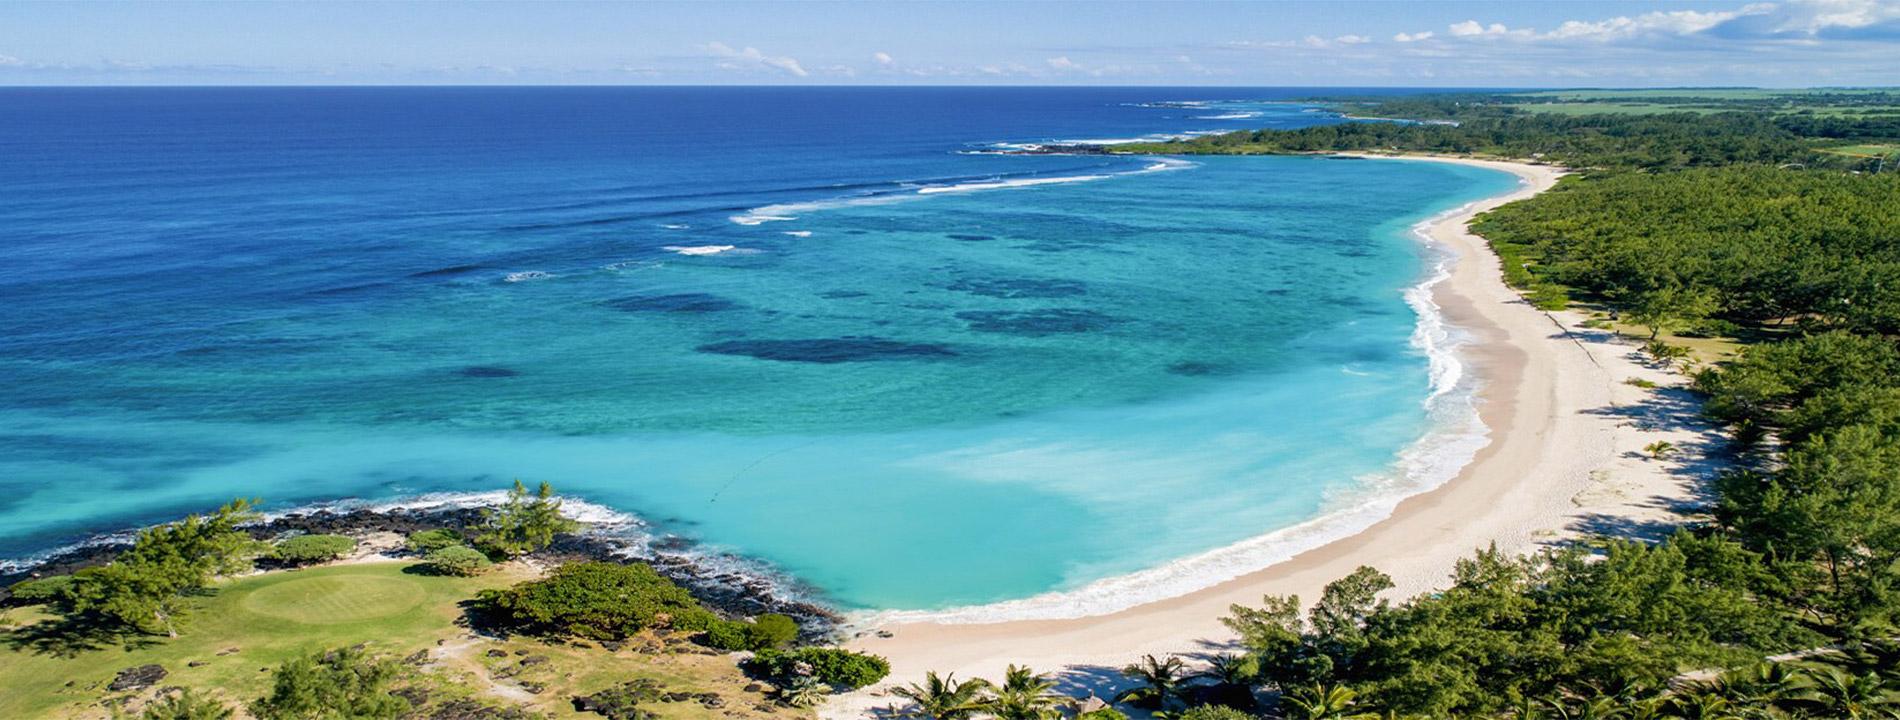 Spiaggia Sun Resorts, Mauritius